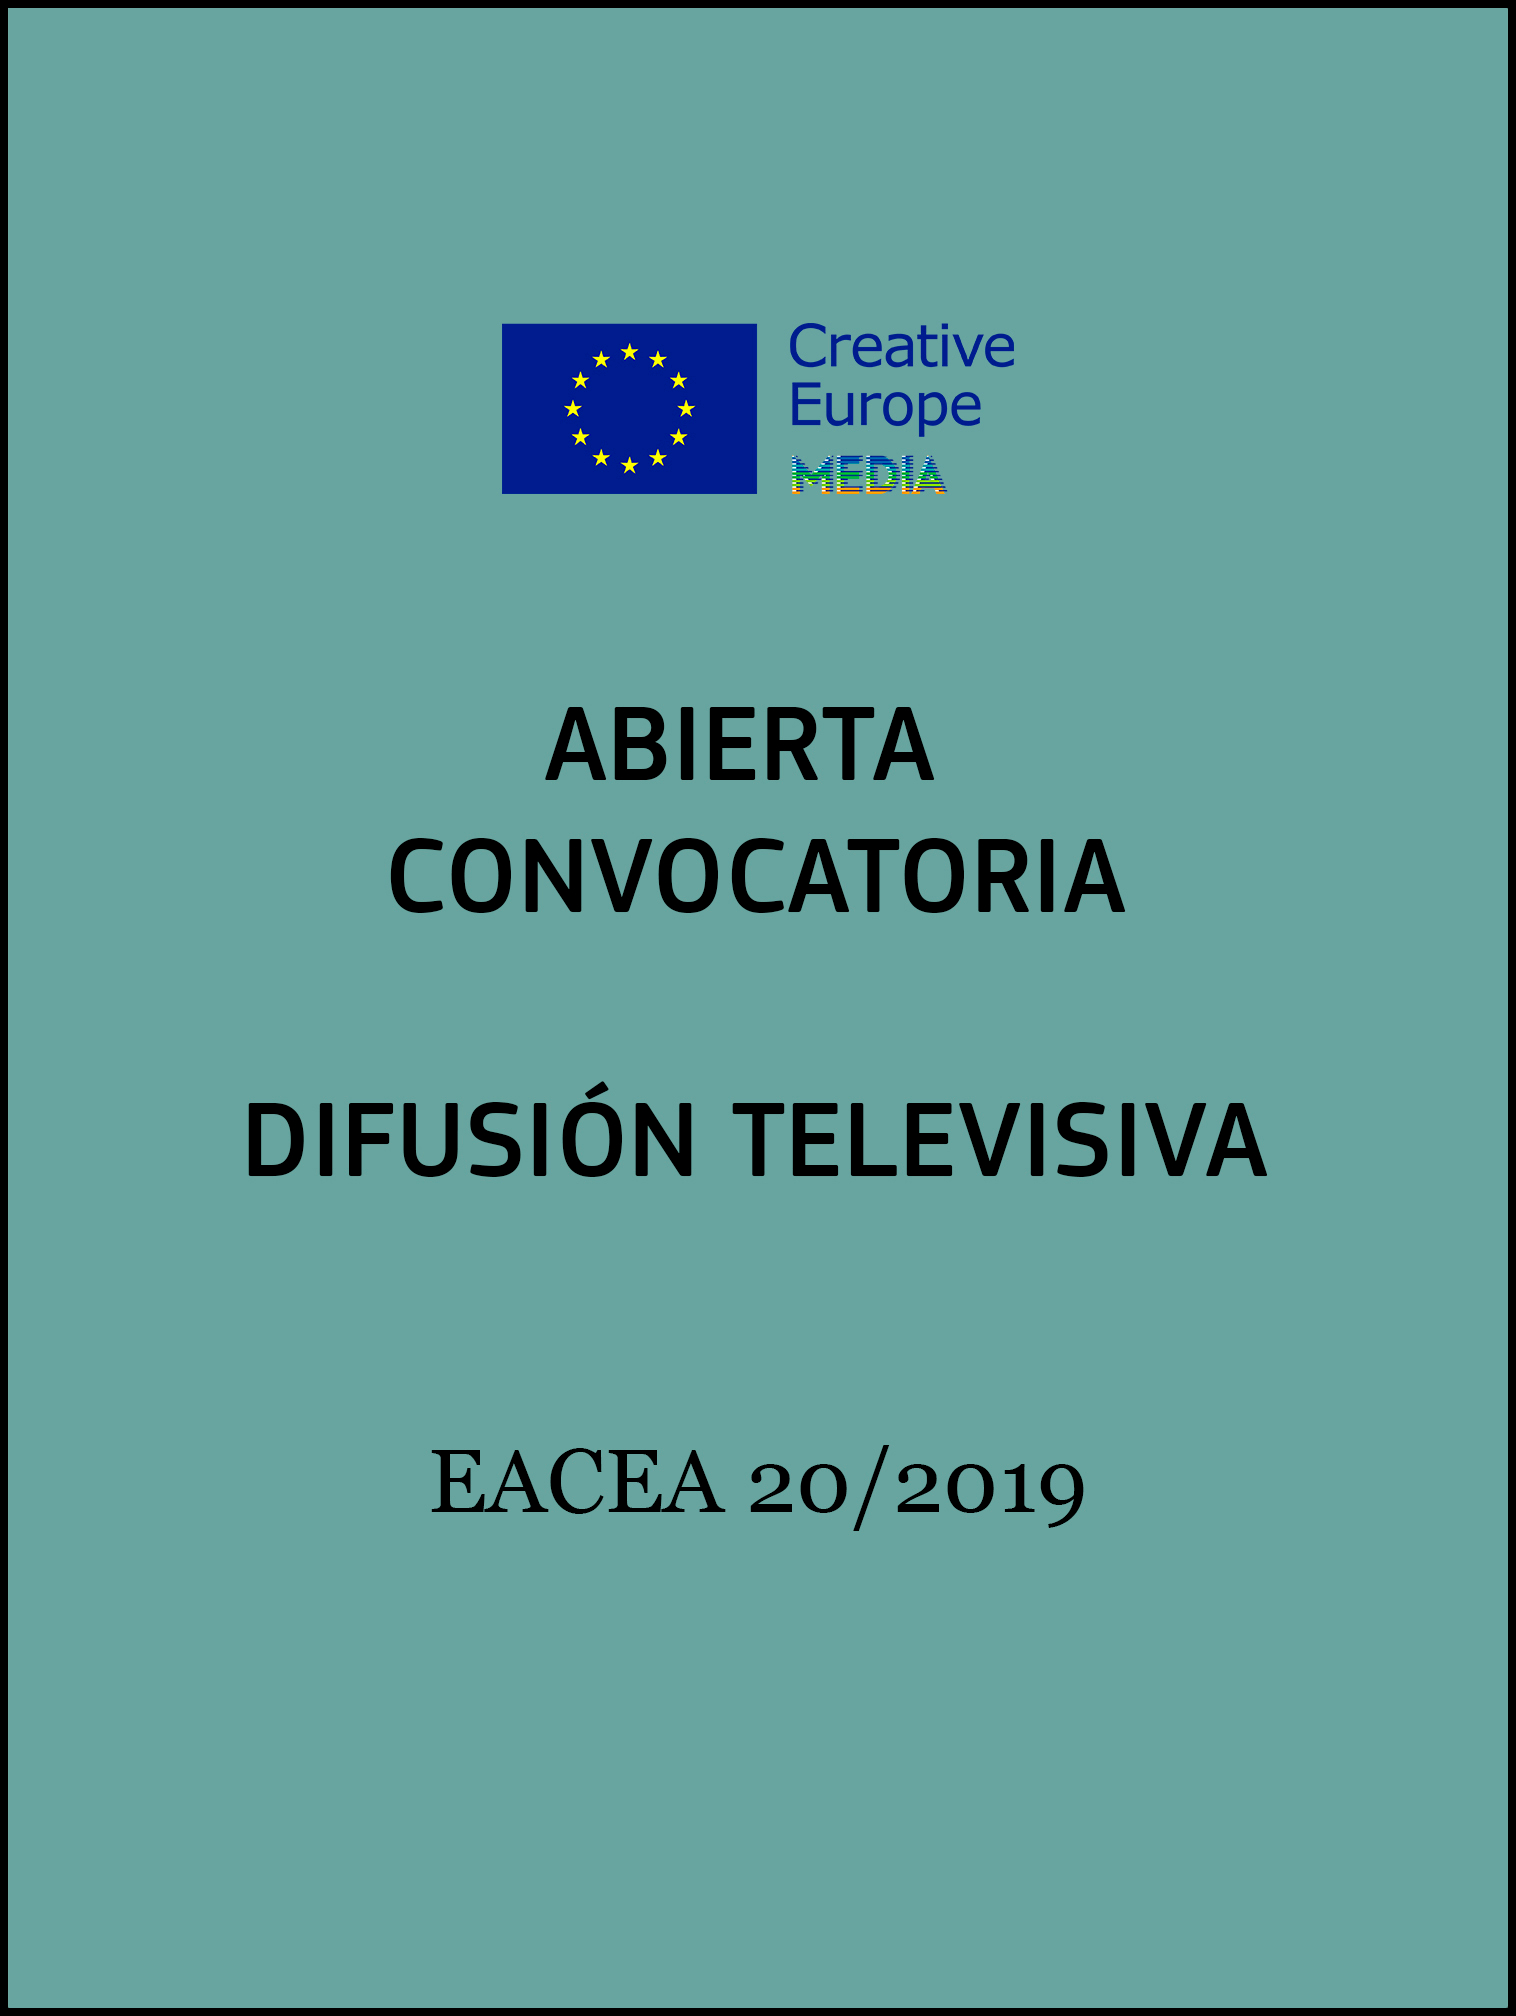 Difusion televisiva apertura interior EACEA 20 2019